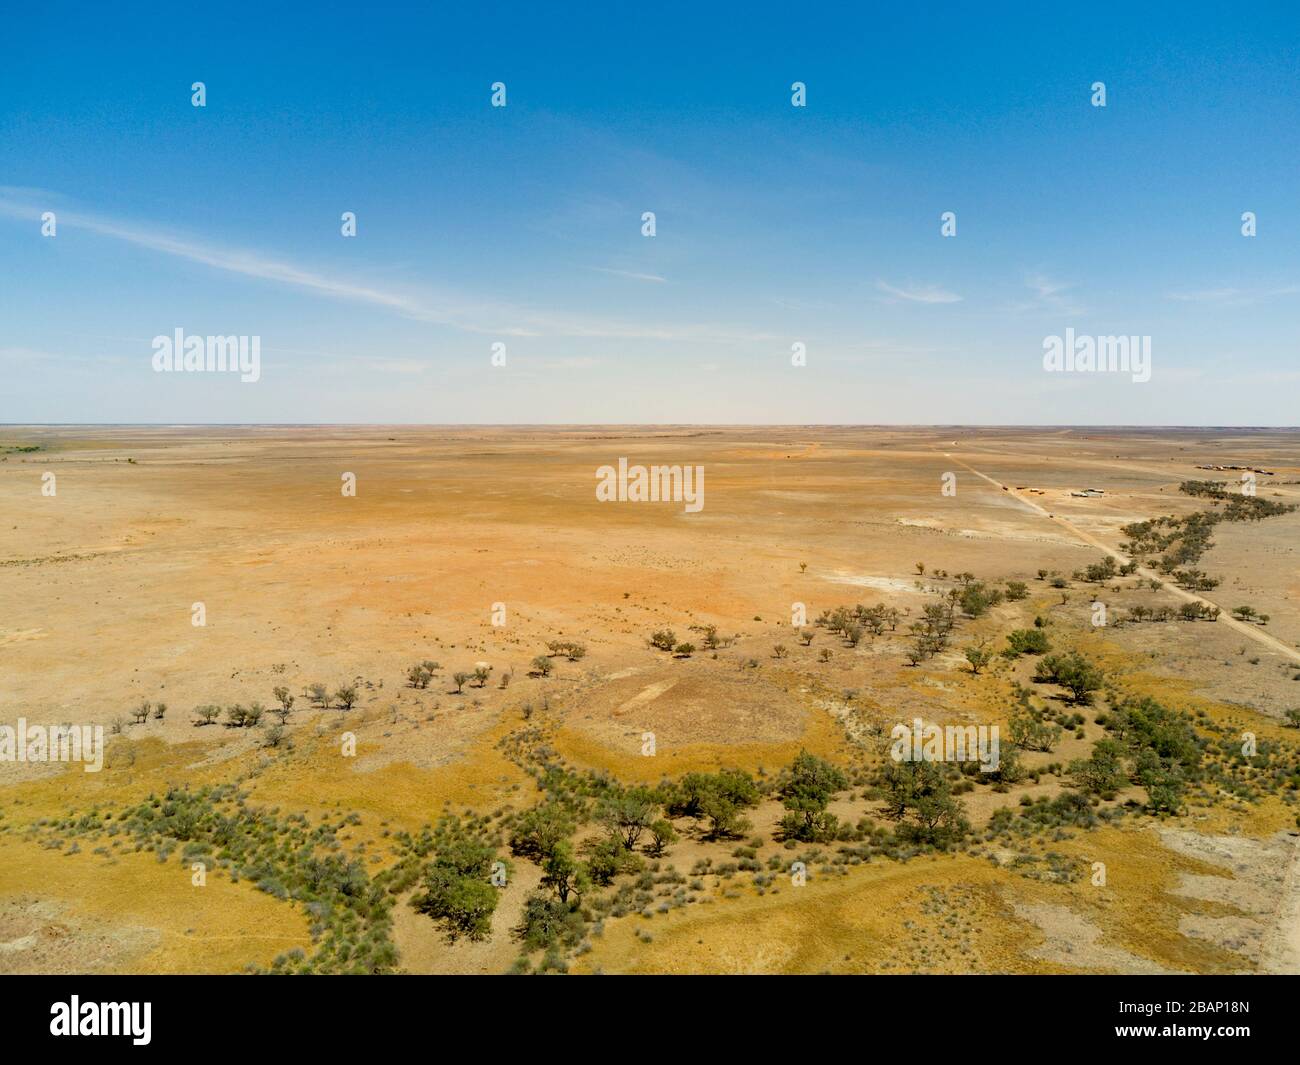 Aerial of flood plains of Coopers Creek Western Queensland Australia Stock Photo